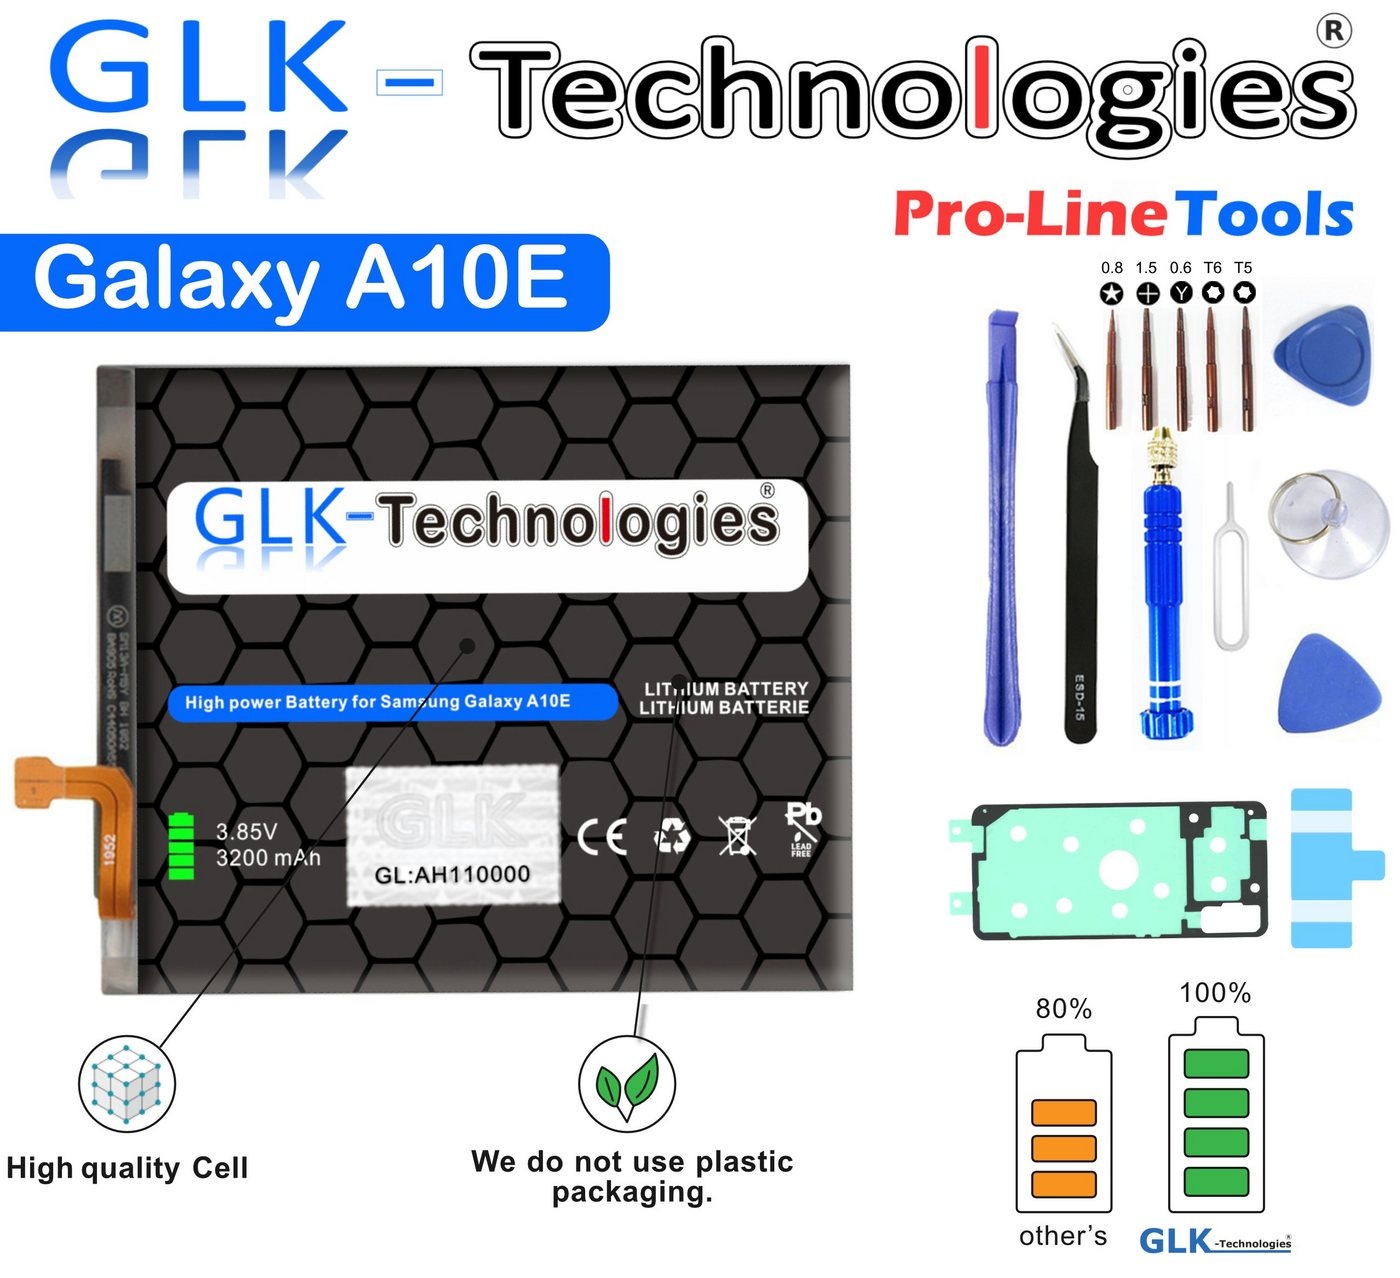 GLK-Technologies High Power Ersatzakku kompatibel mit Samsung Galaxy A10 (A105F) EB-BA750ABU, Original GLK-Technologies Battery, accu, 3450 mAh Akku, inkl. Profi Werkzeug Set Kit NUE Smartphone-Akku 3450 mAh